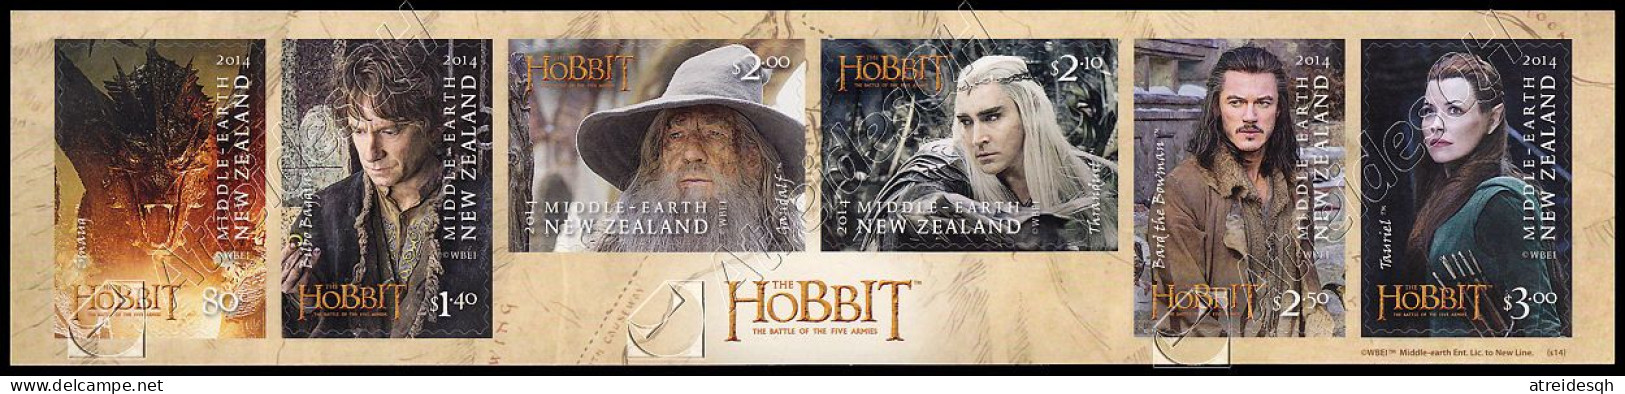 [Q] Nuova Zelanda / New Zealand 2014: Serie Lo Hobbit III Autoadesiva / The Hobbit III Self-adhesive Stamp Set ** - Film